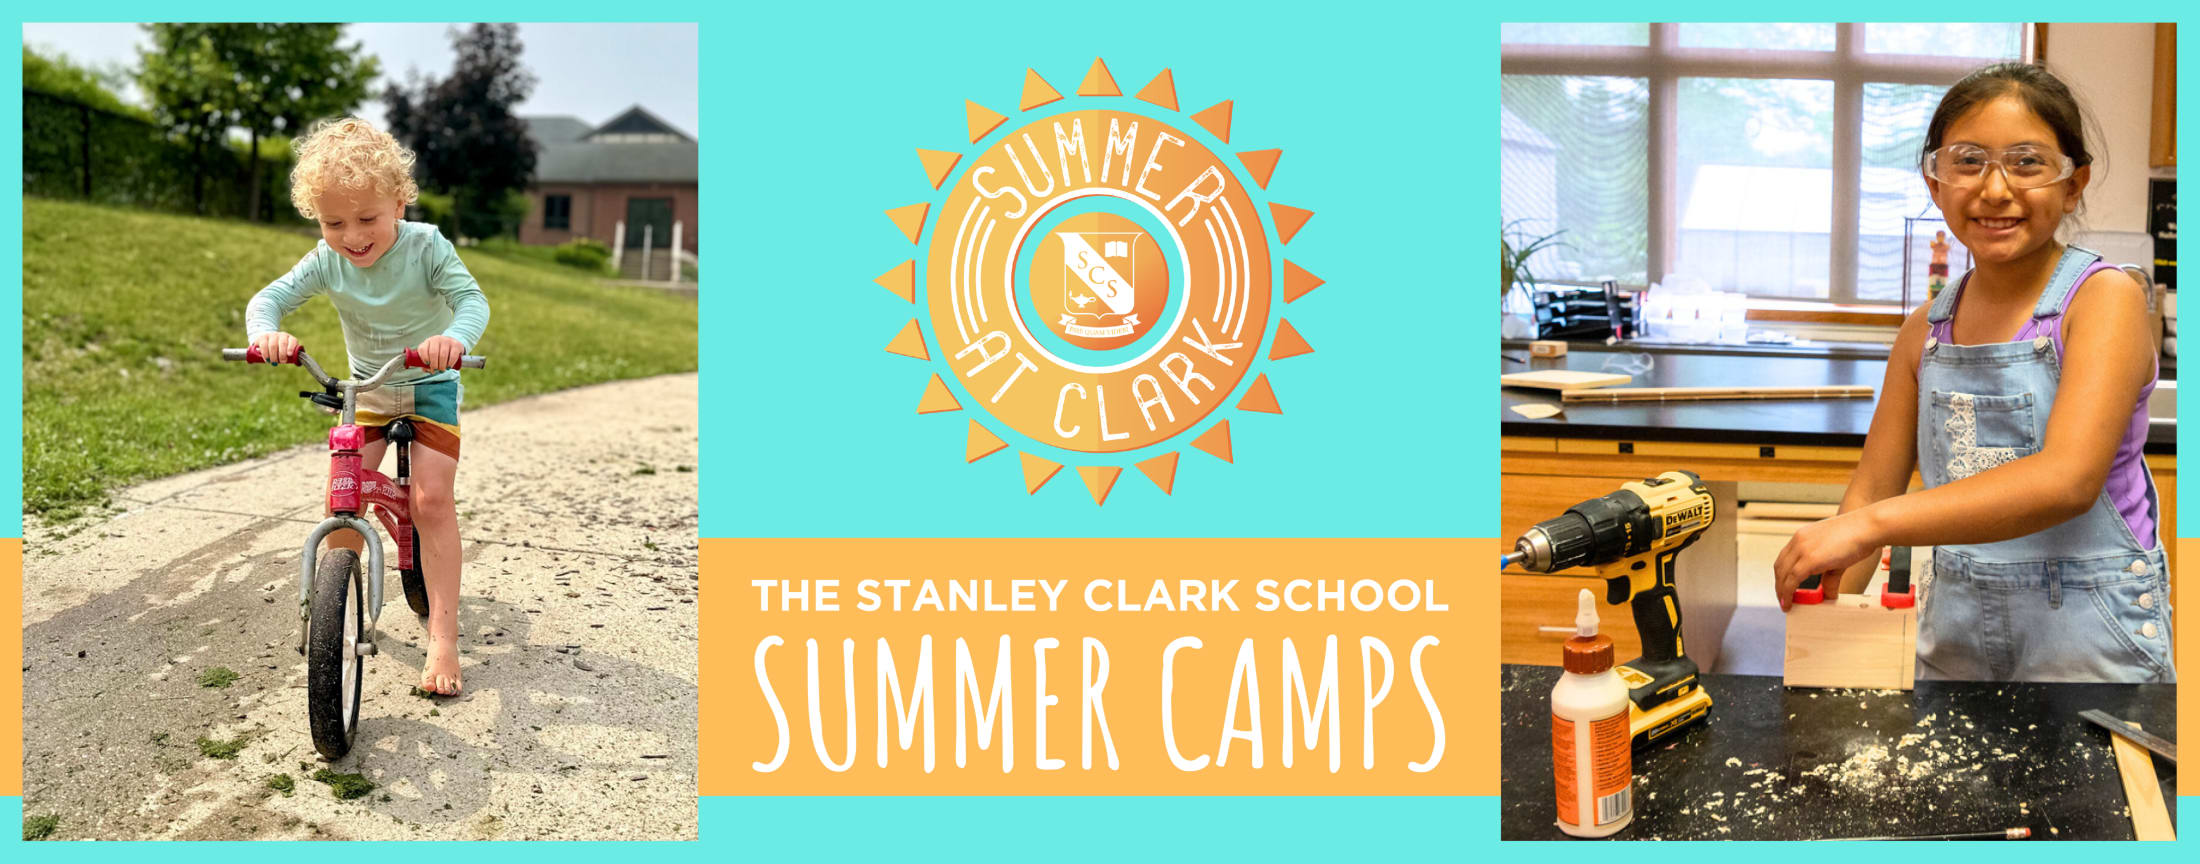 Summer at Clark at The Stanley Clark School 